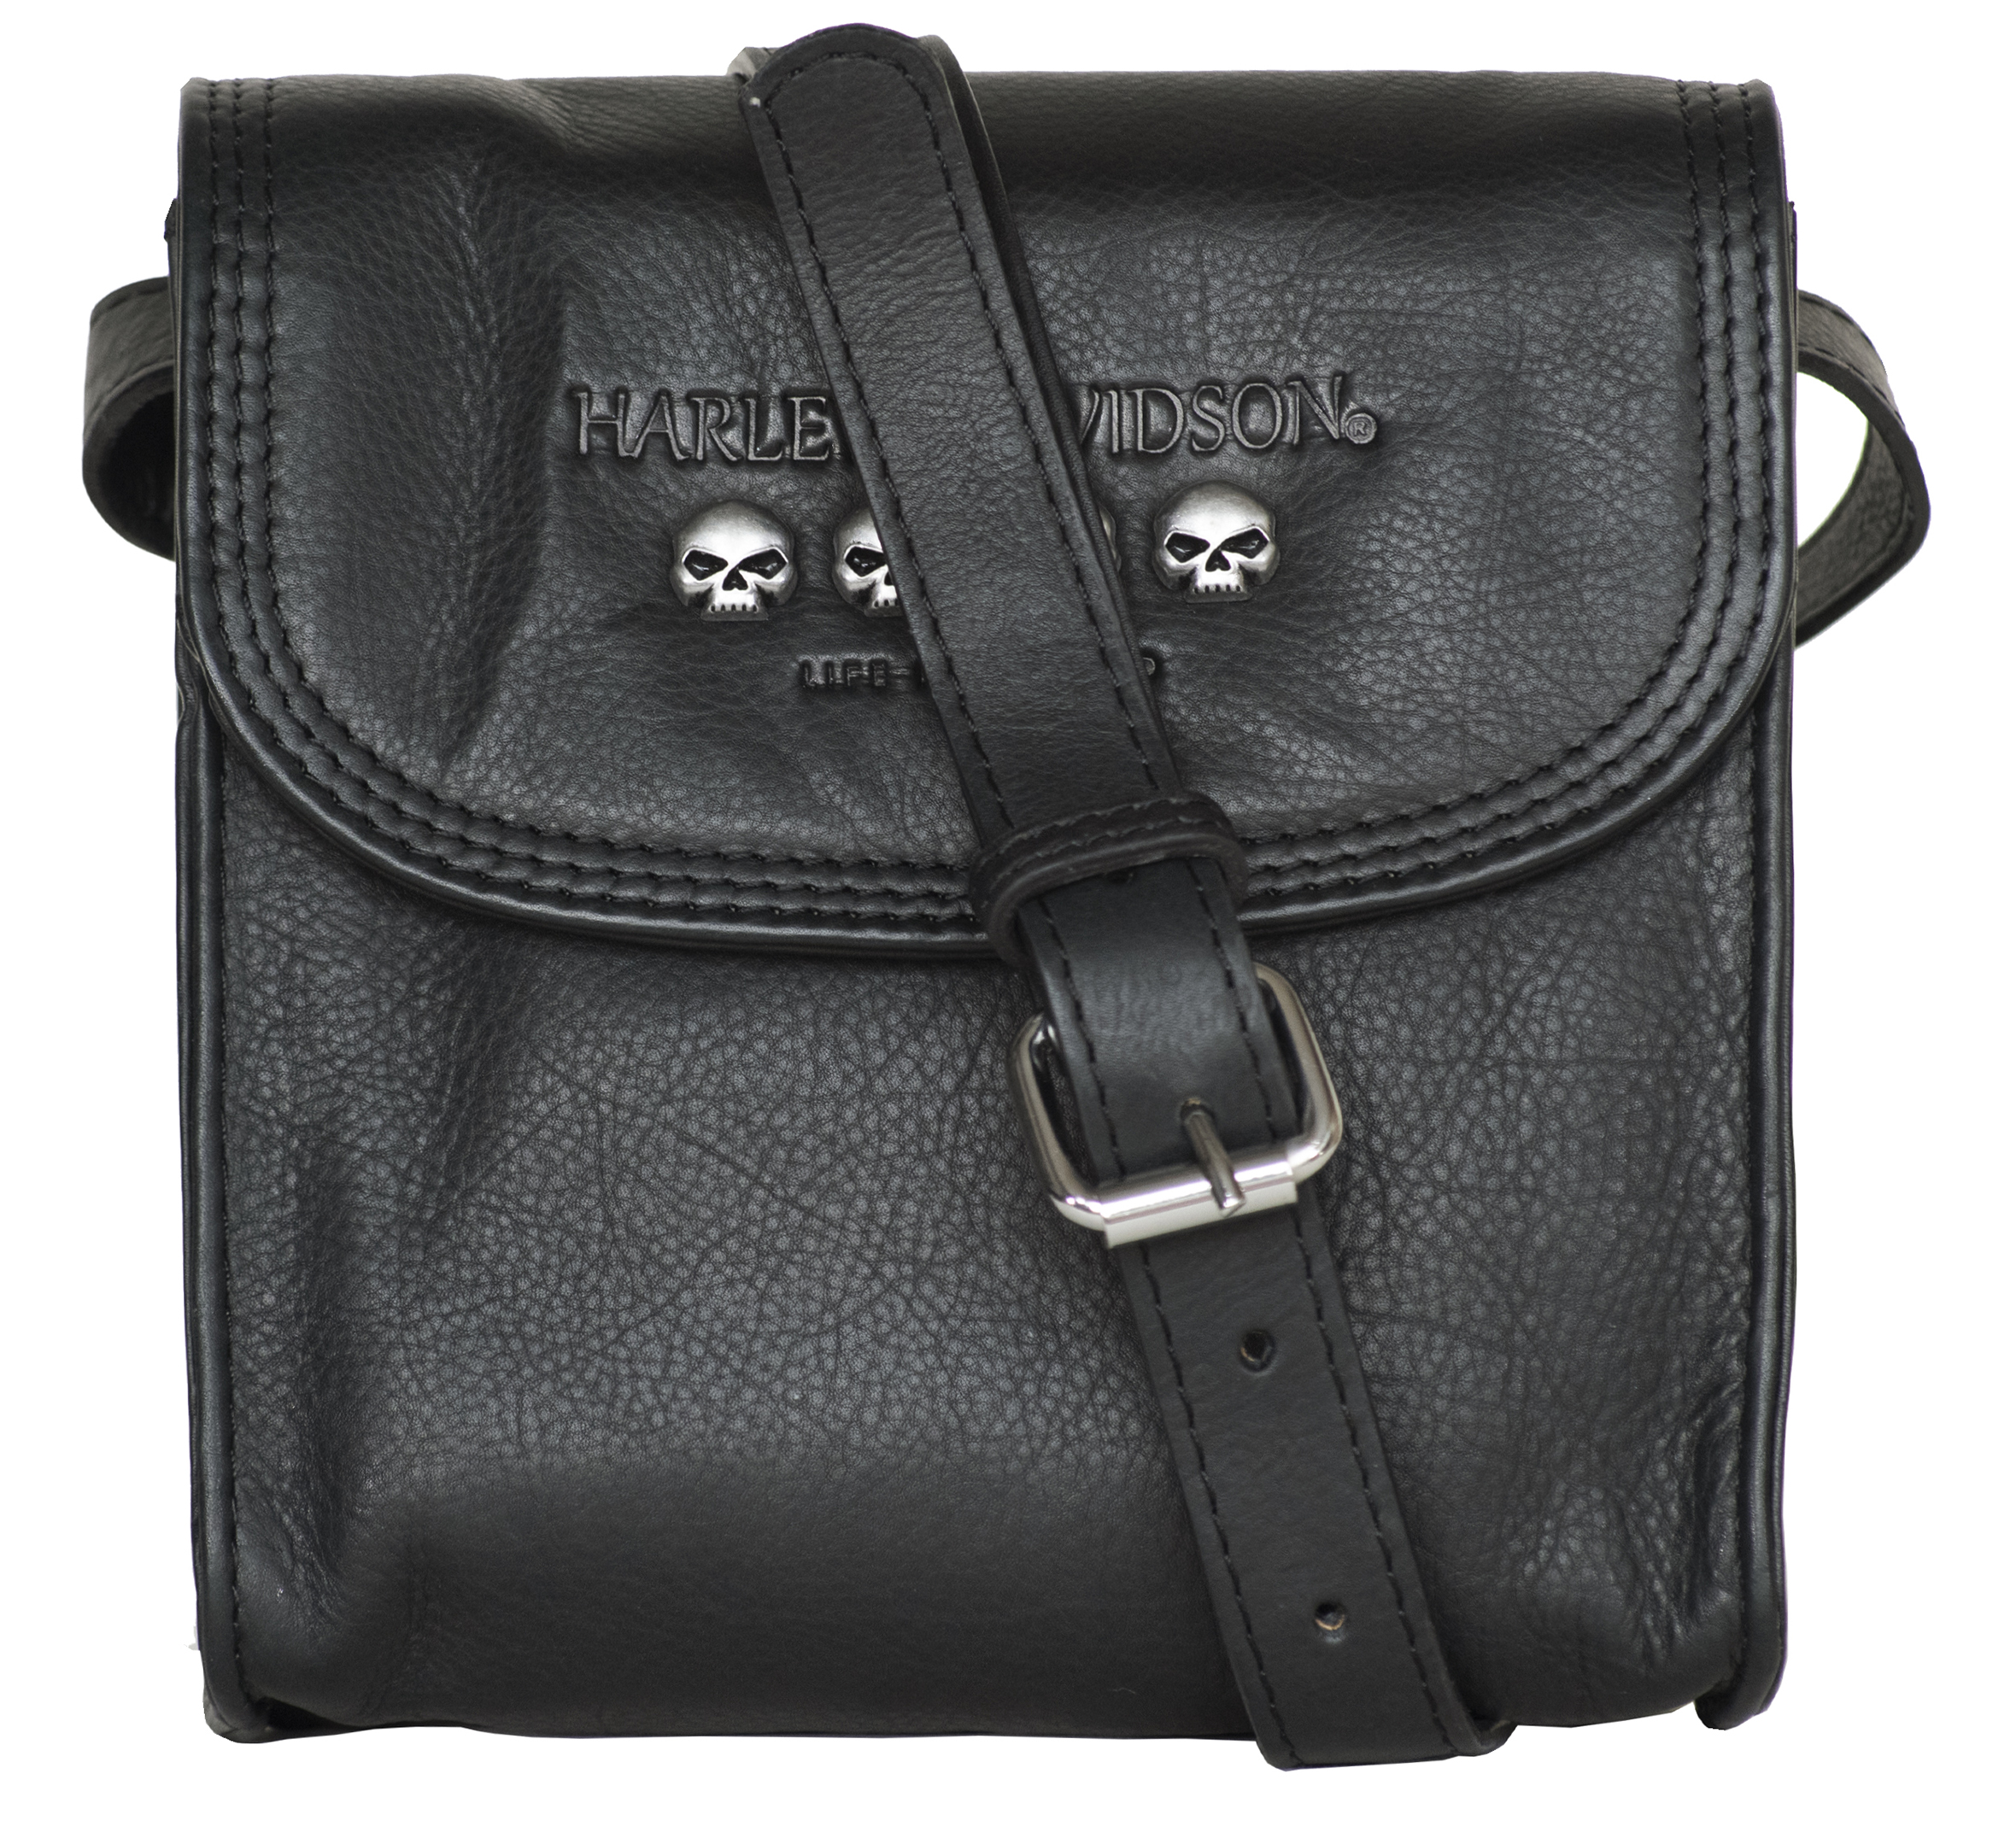 HARLEY DAVIDSON BACKPACK Purse - Black Leather w/ Bar & Shield all over  Embosse $42.99 - PicClick